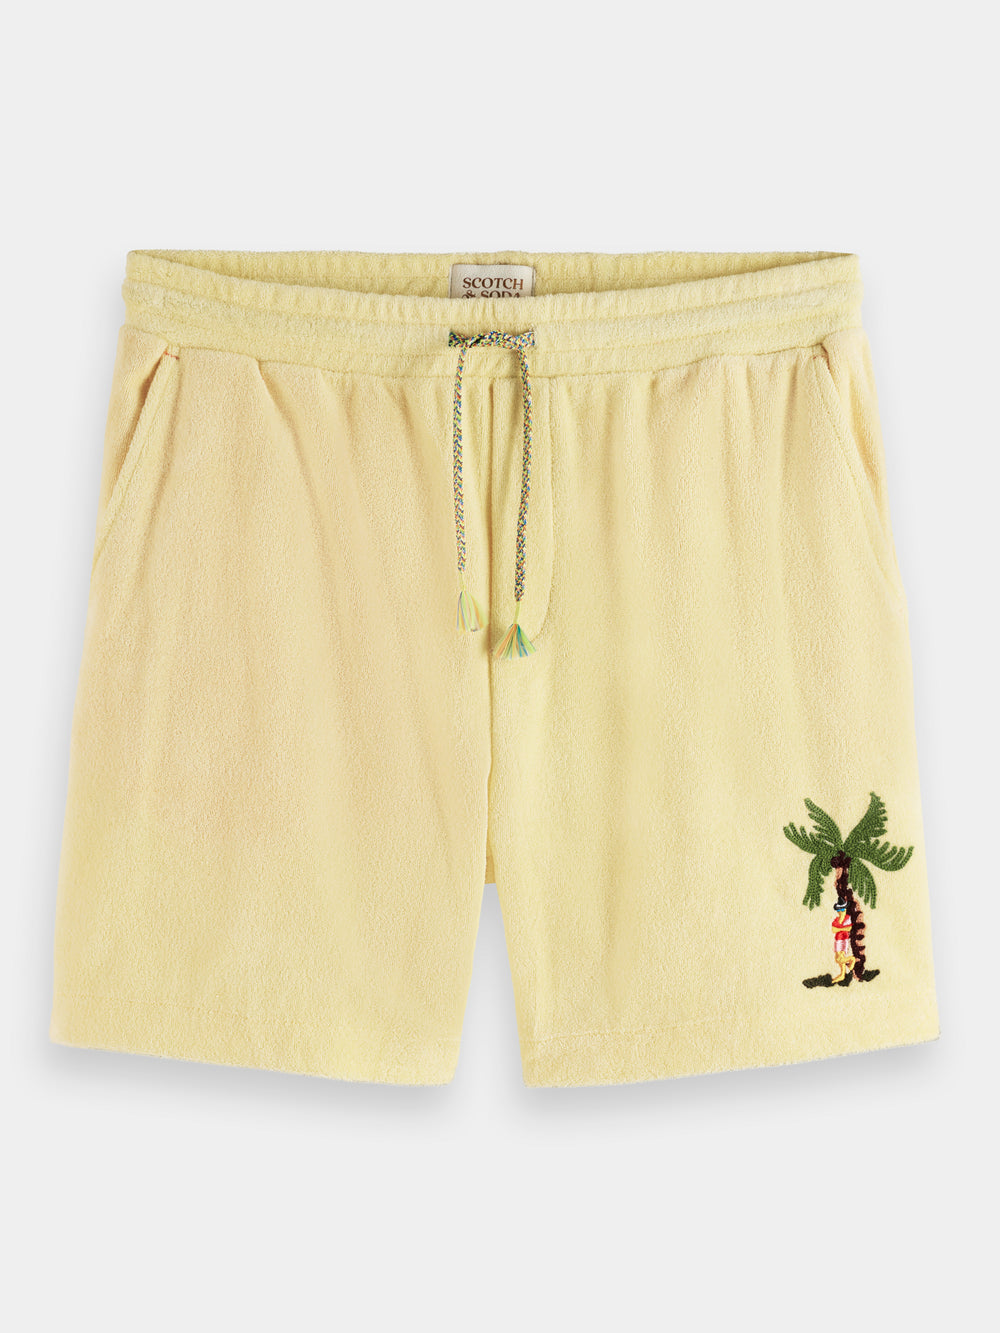 Toweling Bermuda shorts with embroidery - Scotch & Soda AU